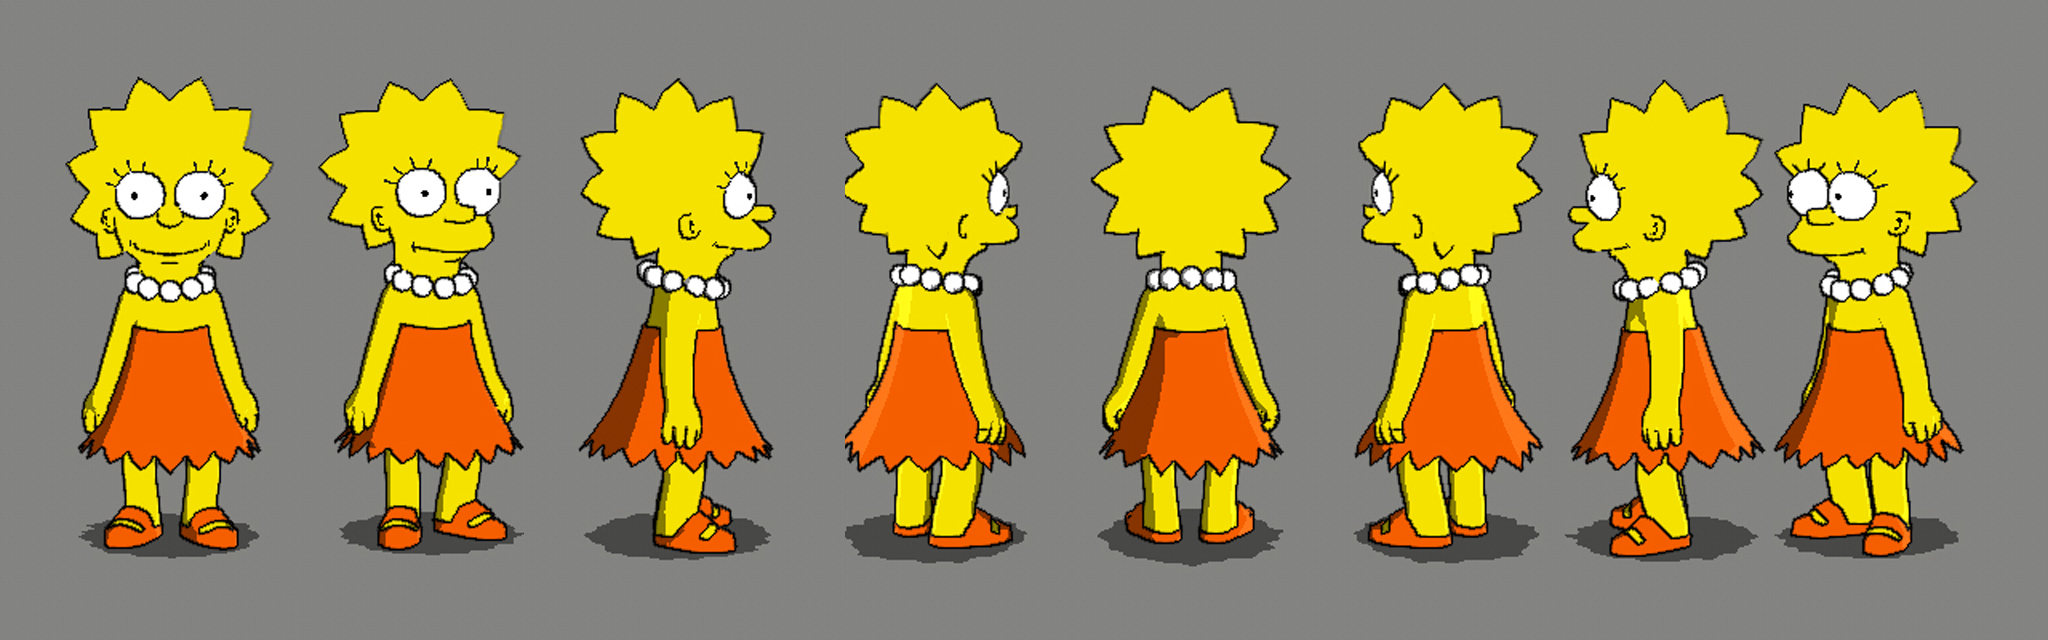 The Simpsons Game - Lisette Titre Portfolio.